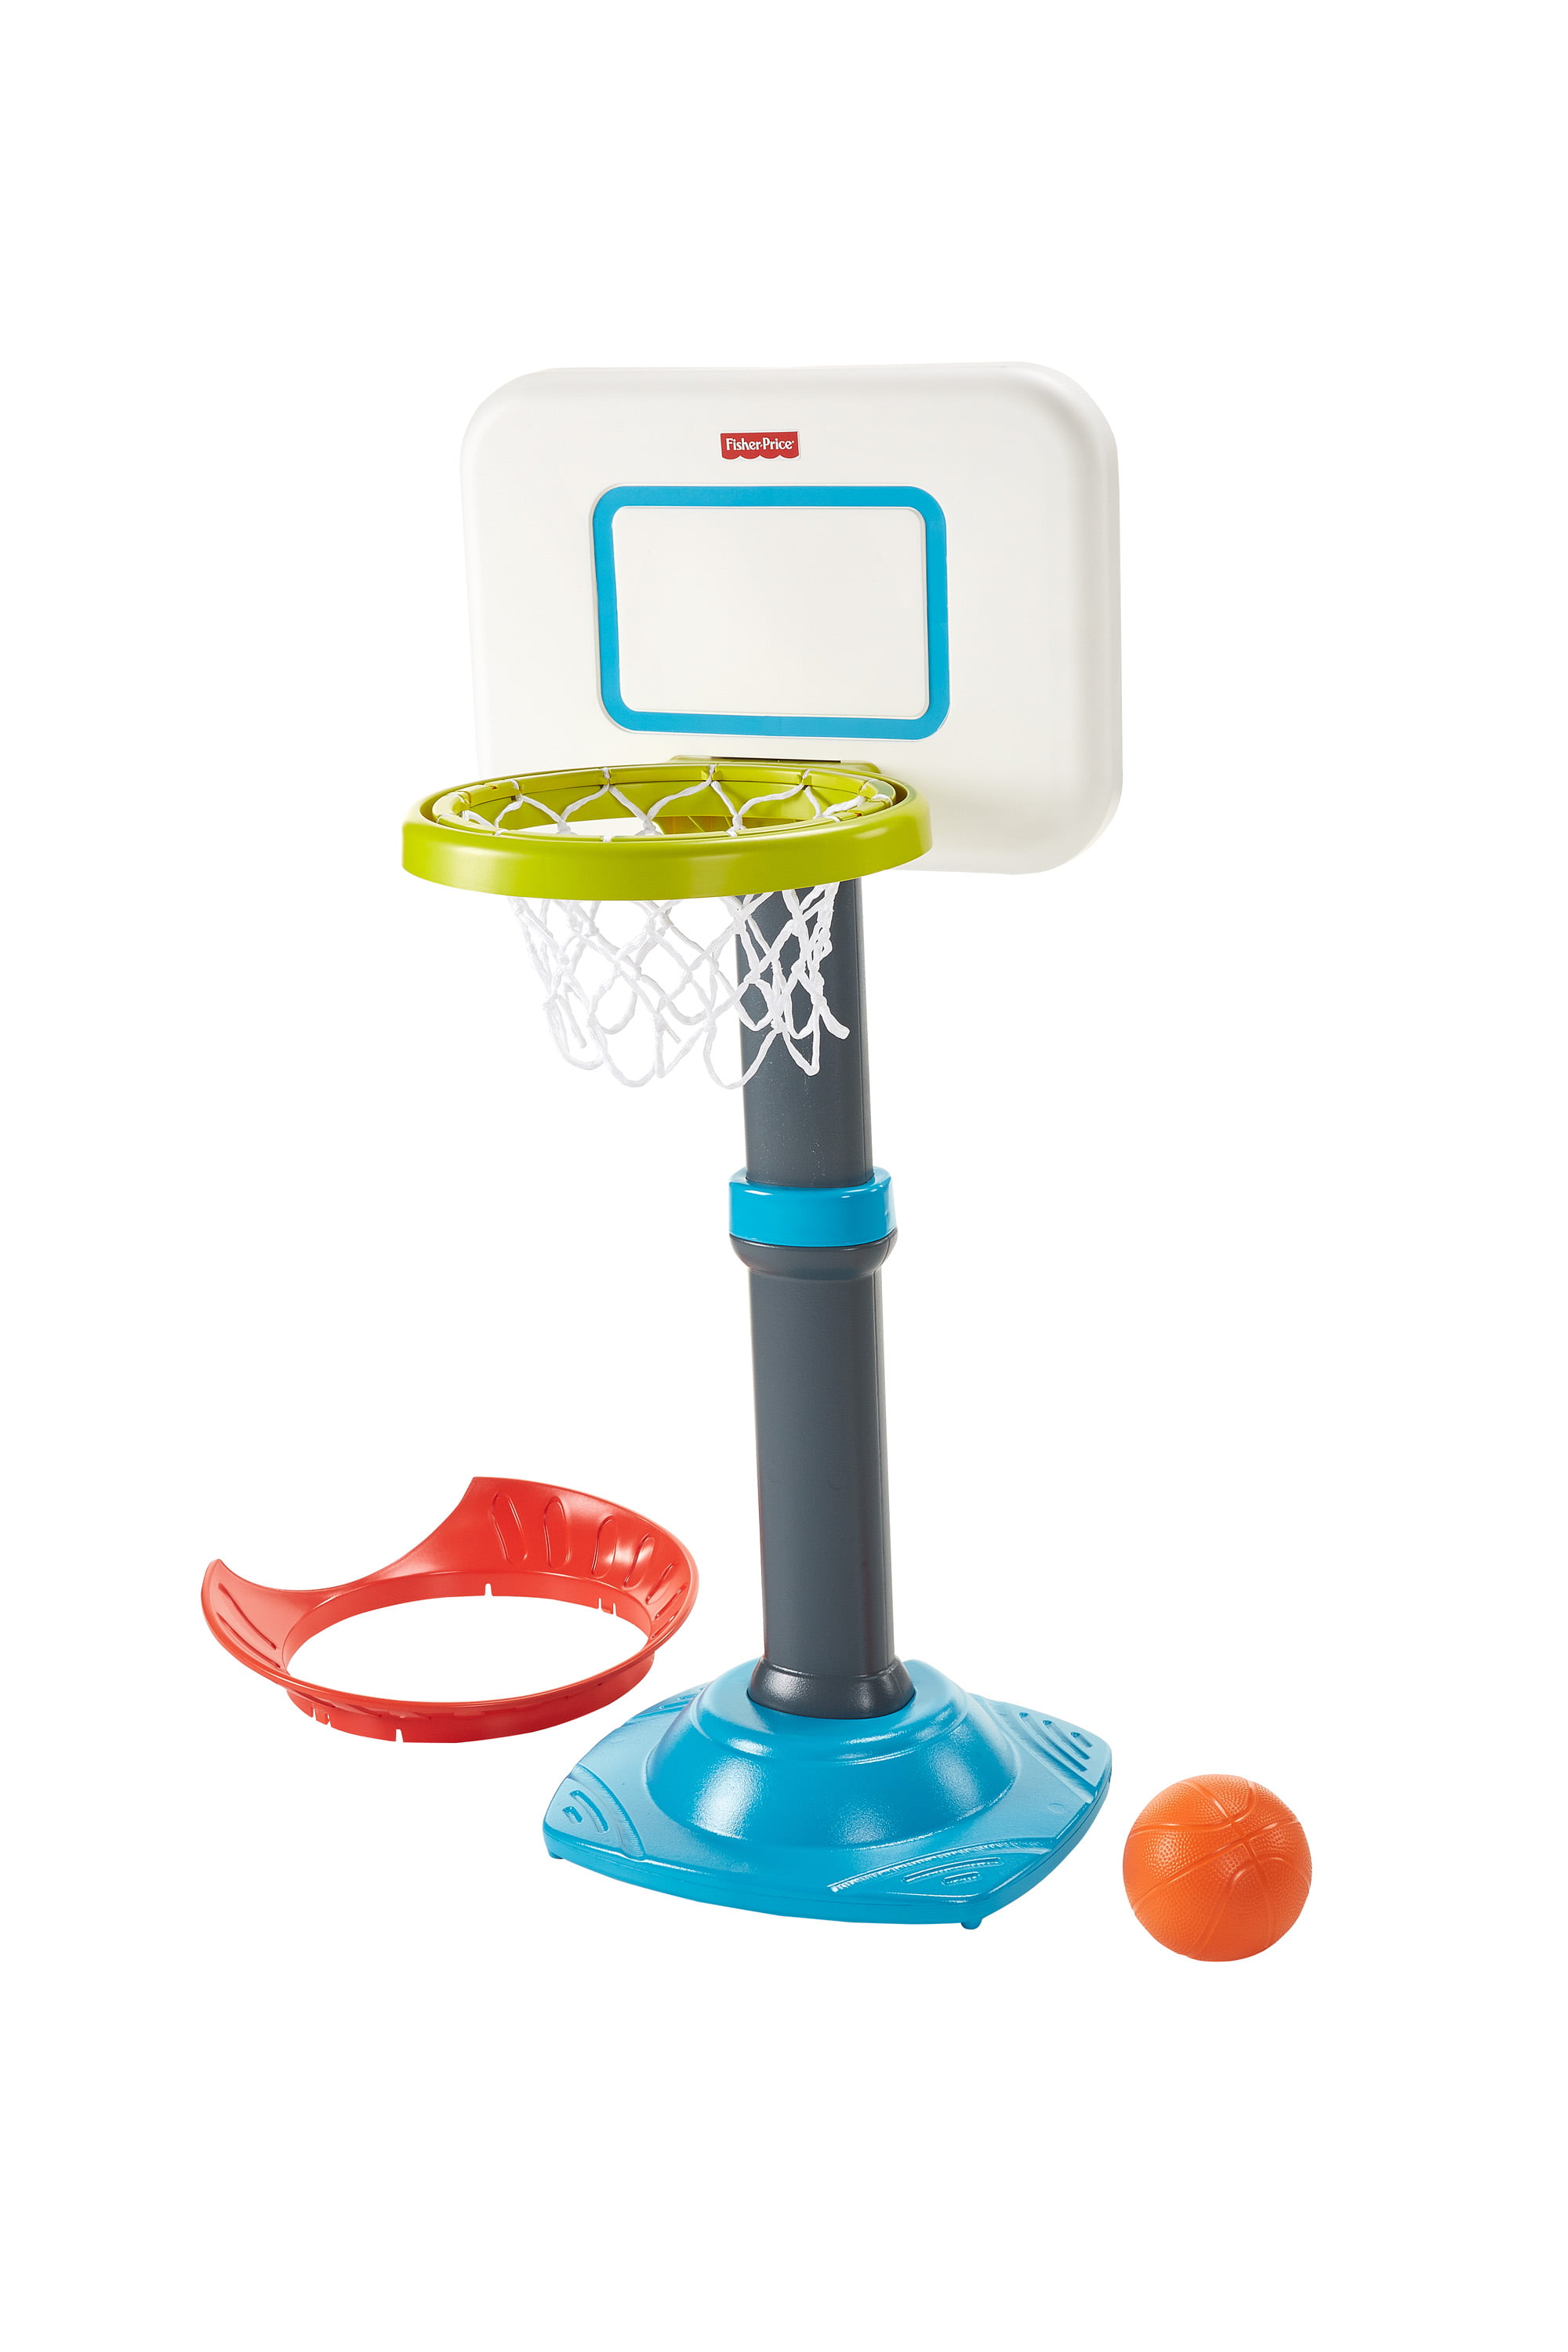 fisher-price grow-to-pro junior basketball - Walmart.com - Walmart.com